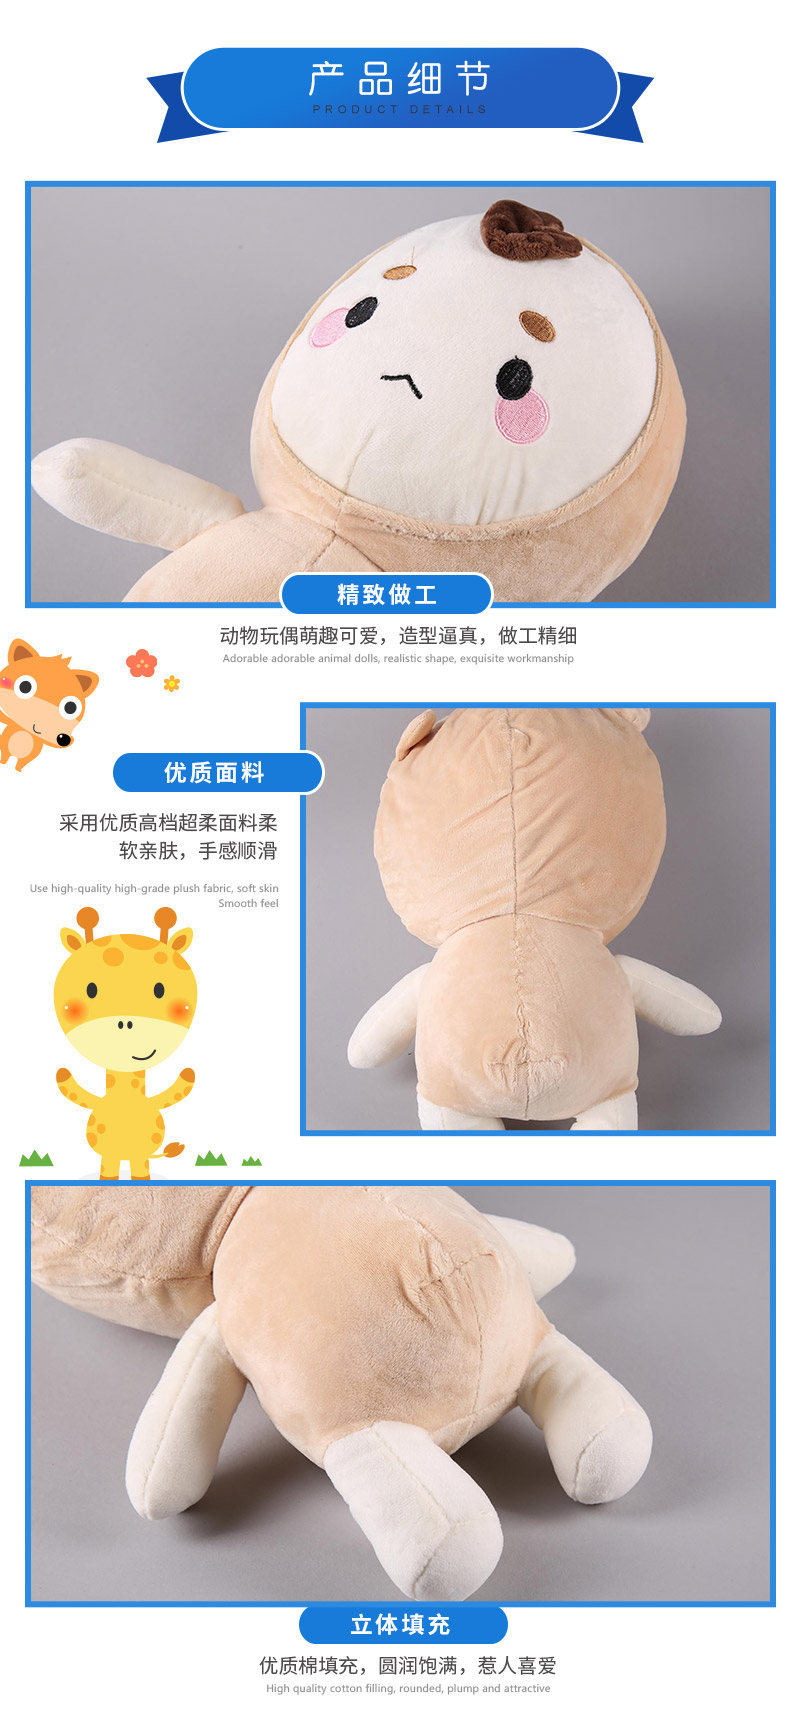 No. 3 Jun super soft plush toy buckwheat pillow to send his girlfriend children wedding gift4